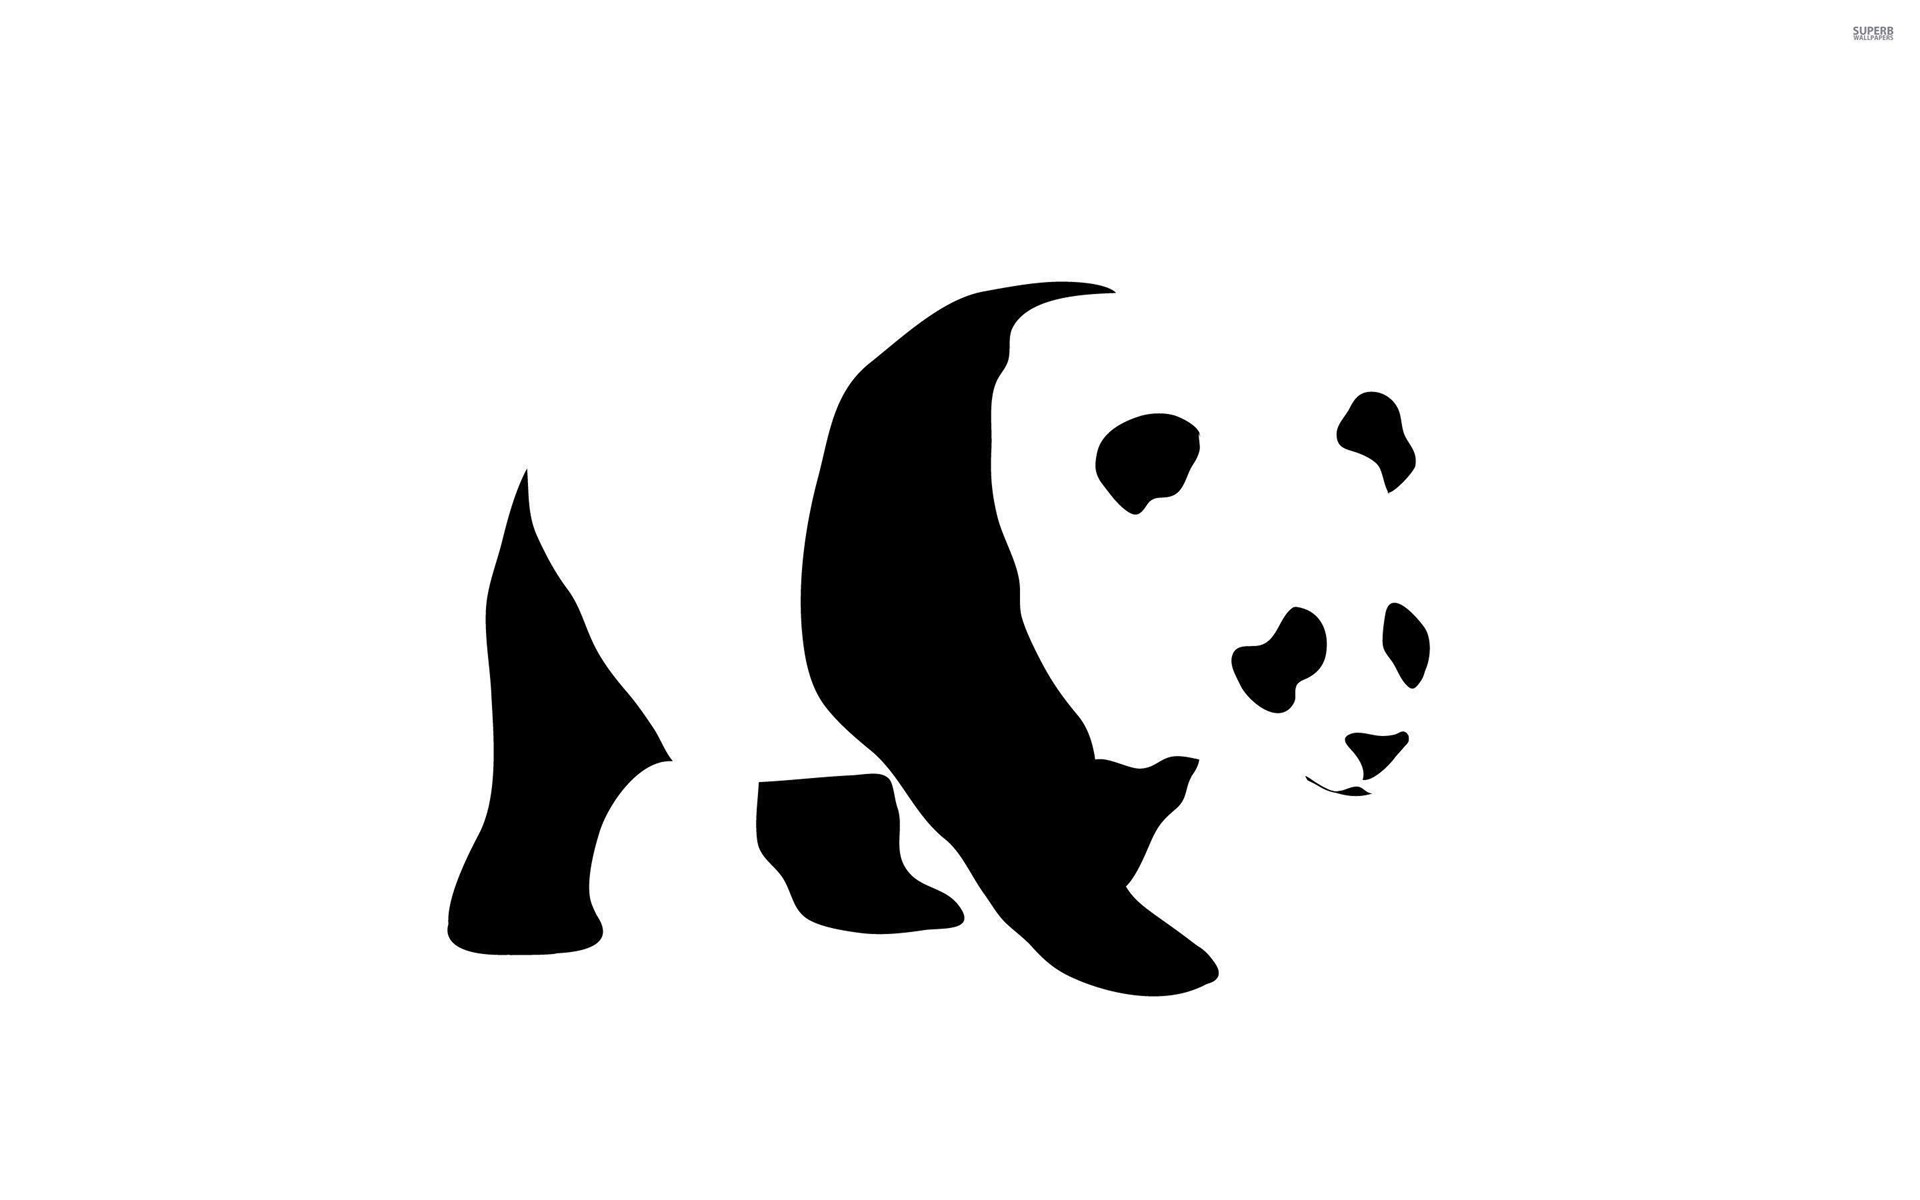 Sad Panda Hidden In The White Background Wallpaper Vector. Desktop Background